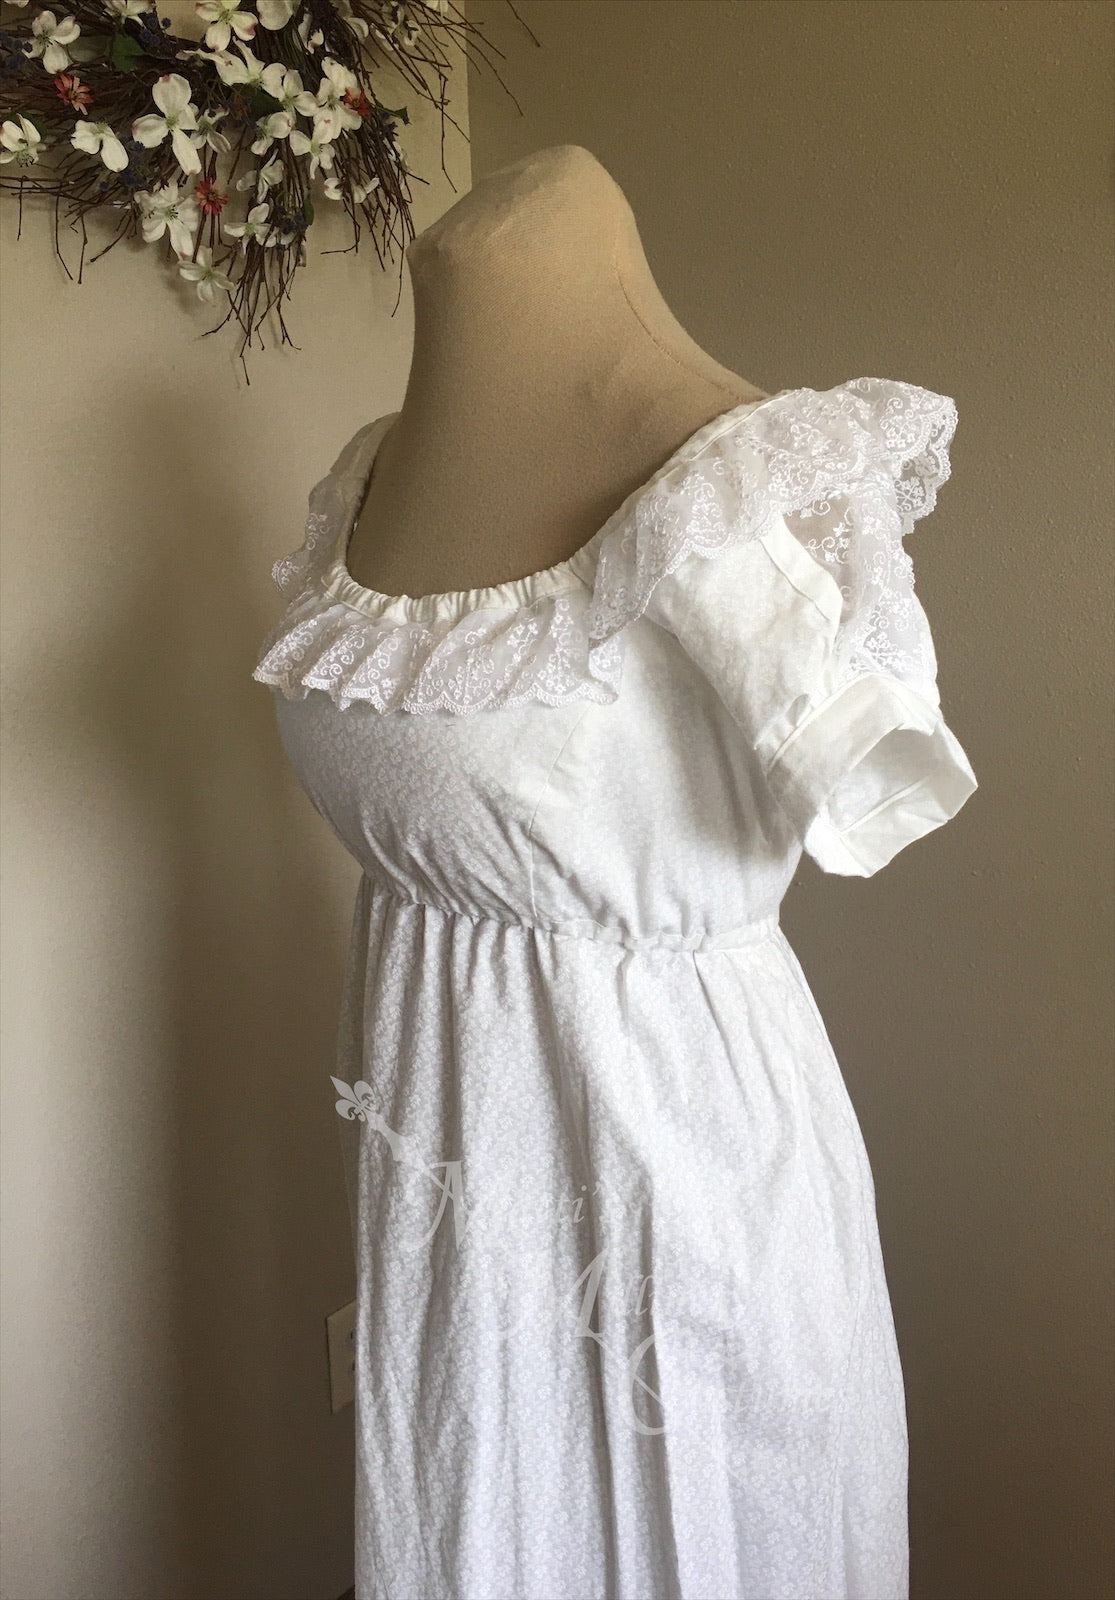 White Elegant Cotton Regency Jane Austen Day Dress Gown